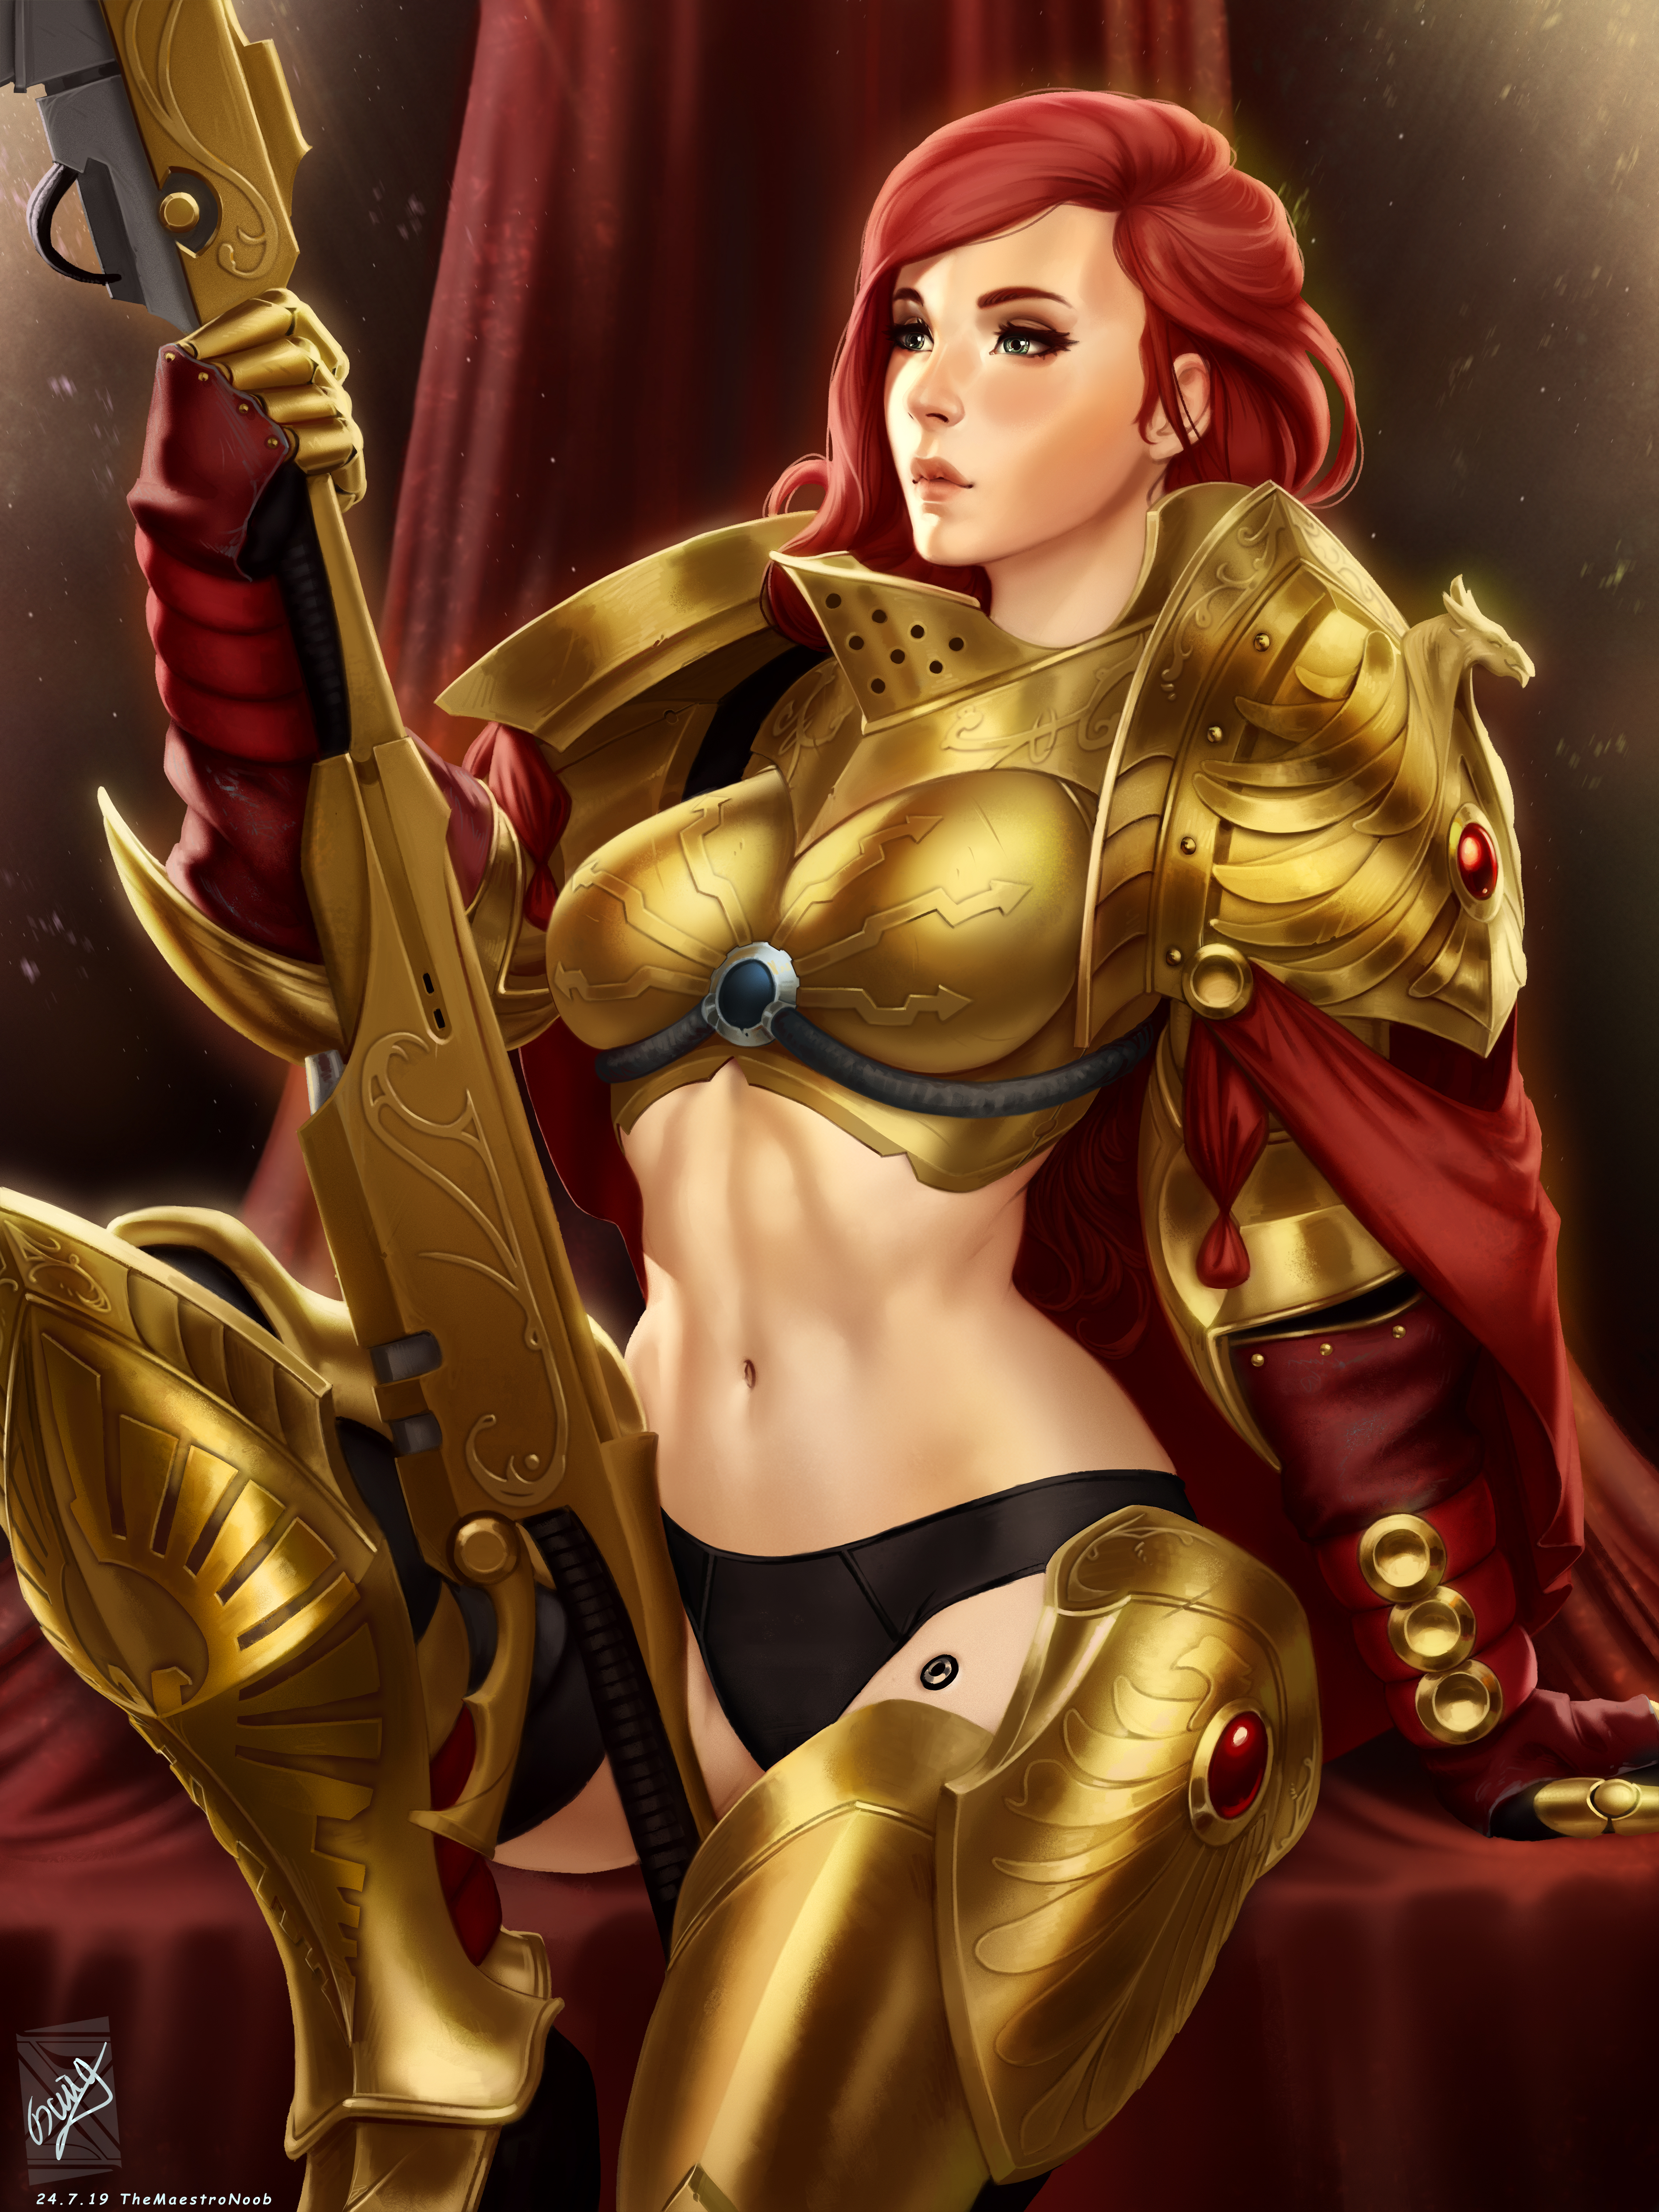 General 4500x6000 Adeptus Custodes Warhammer video games video game girls video game characters armor redhead artwork drawing fan art TheMaestroNoob